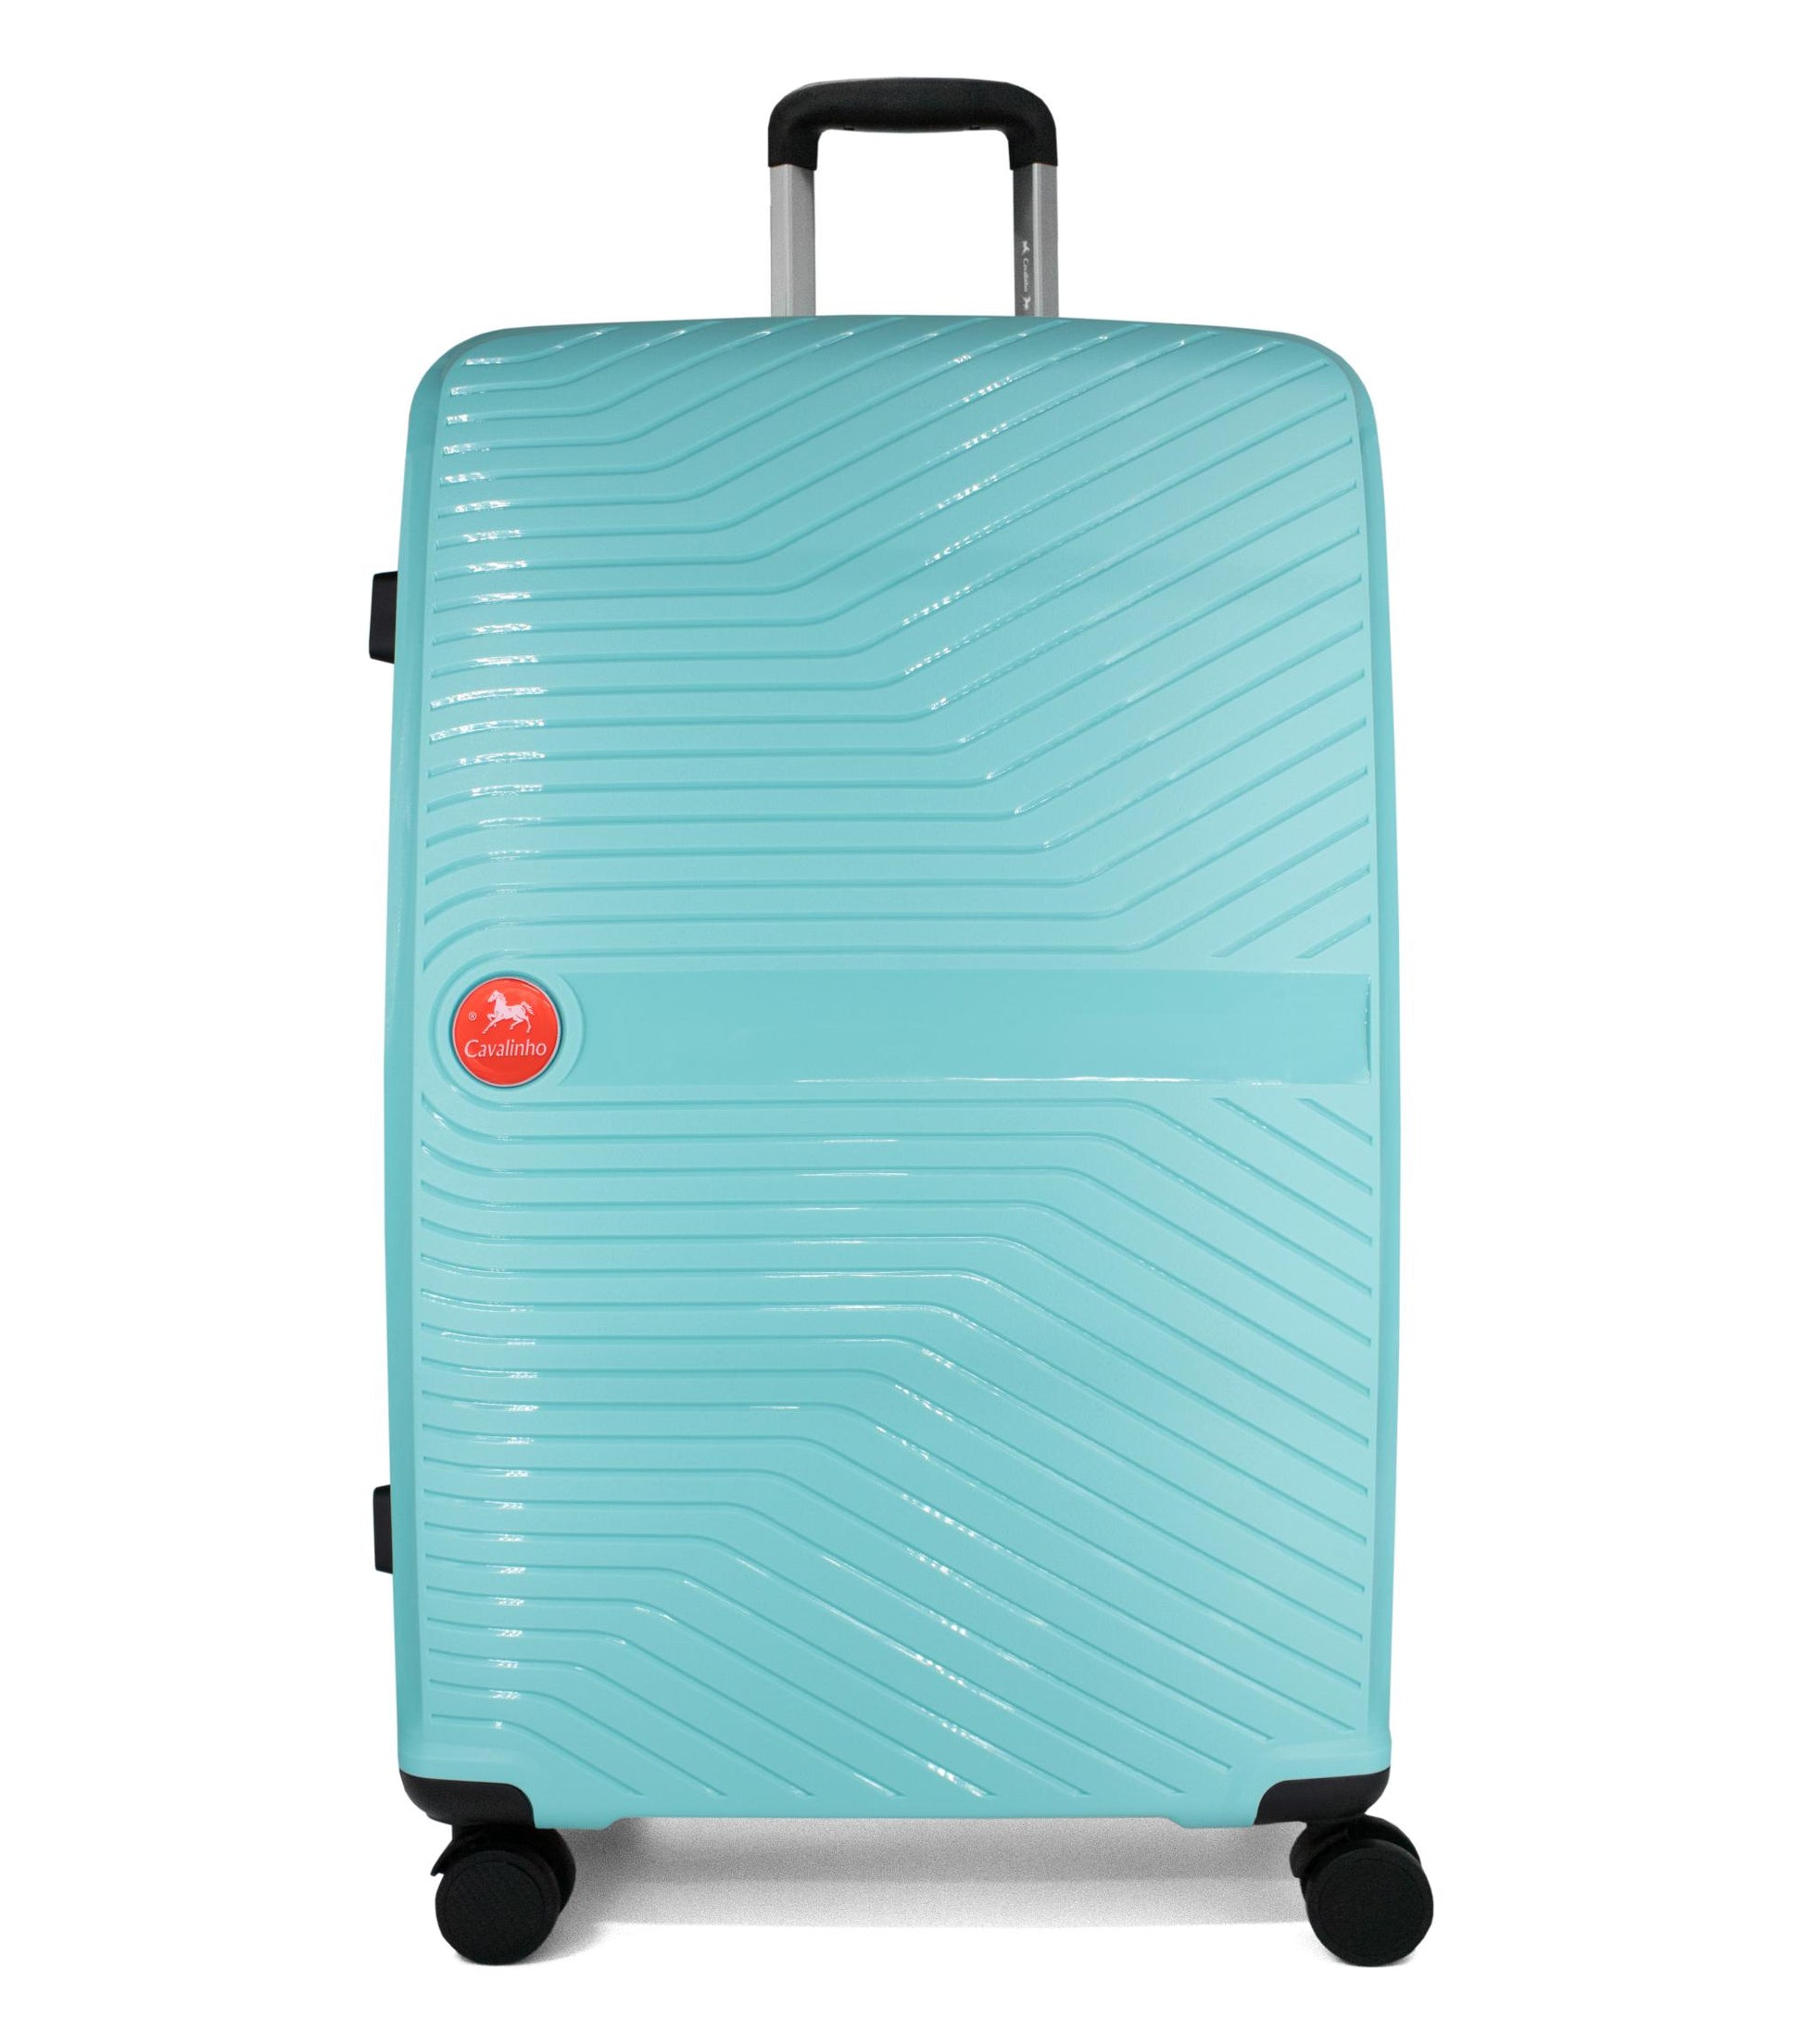 Cavalinho Colorful Check-in Hardside Luggage (28") - 28 inch LightBlue - 68020004.10.28_1